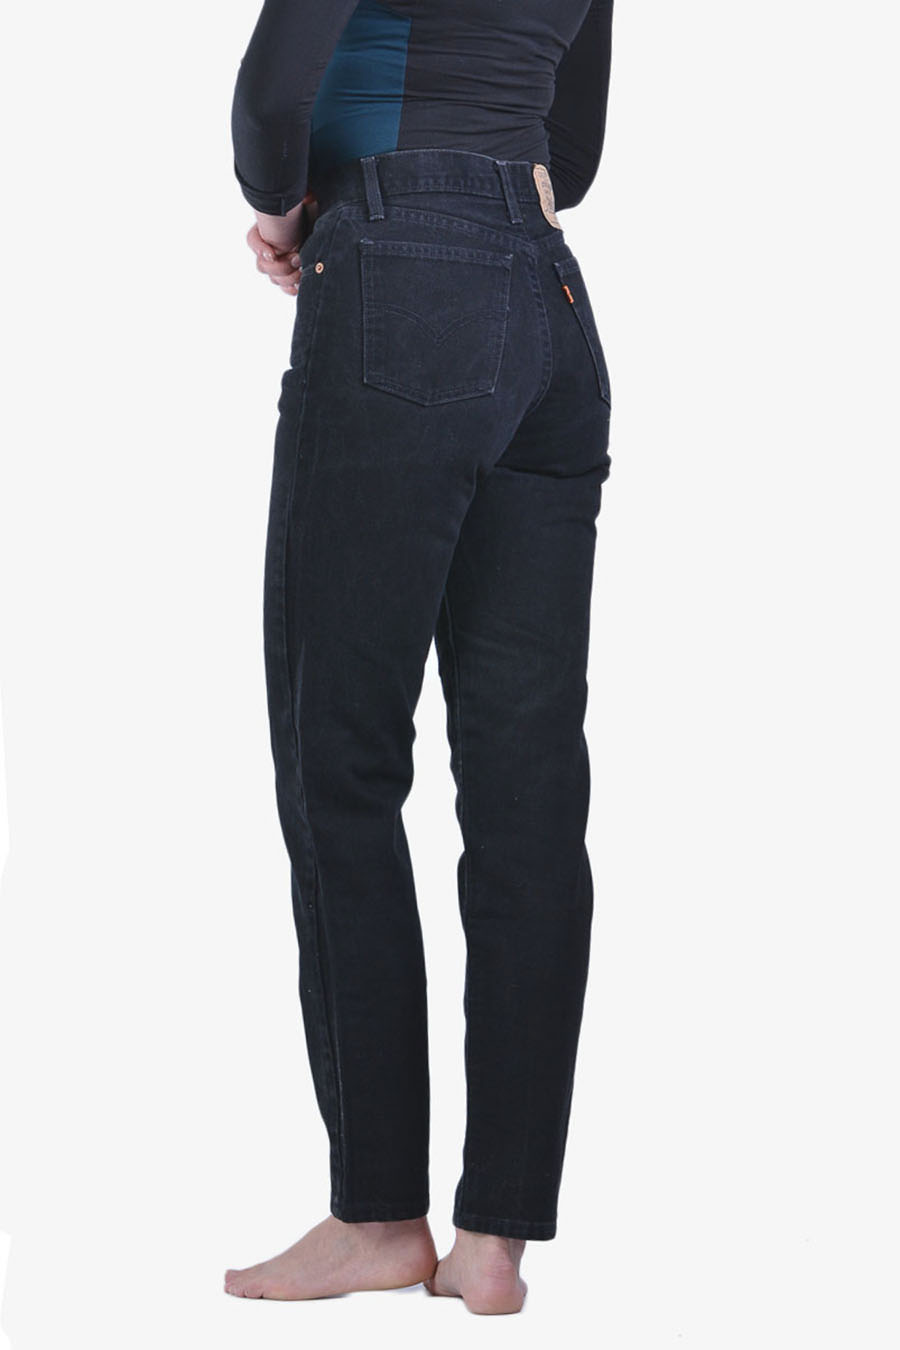 Rendition moderately phone Vintage Levi's 891 Slim Fit Jeans | Size 31/30 - Brick Vintage